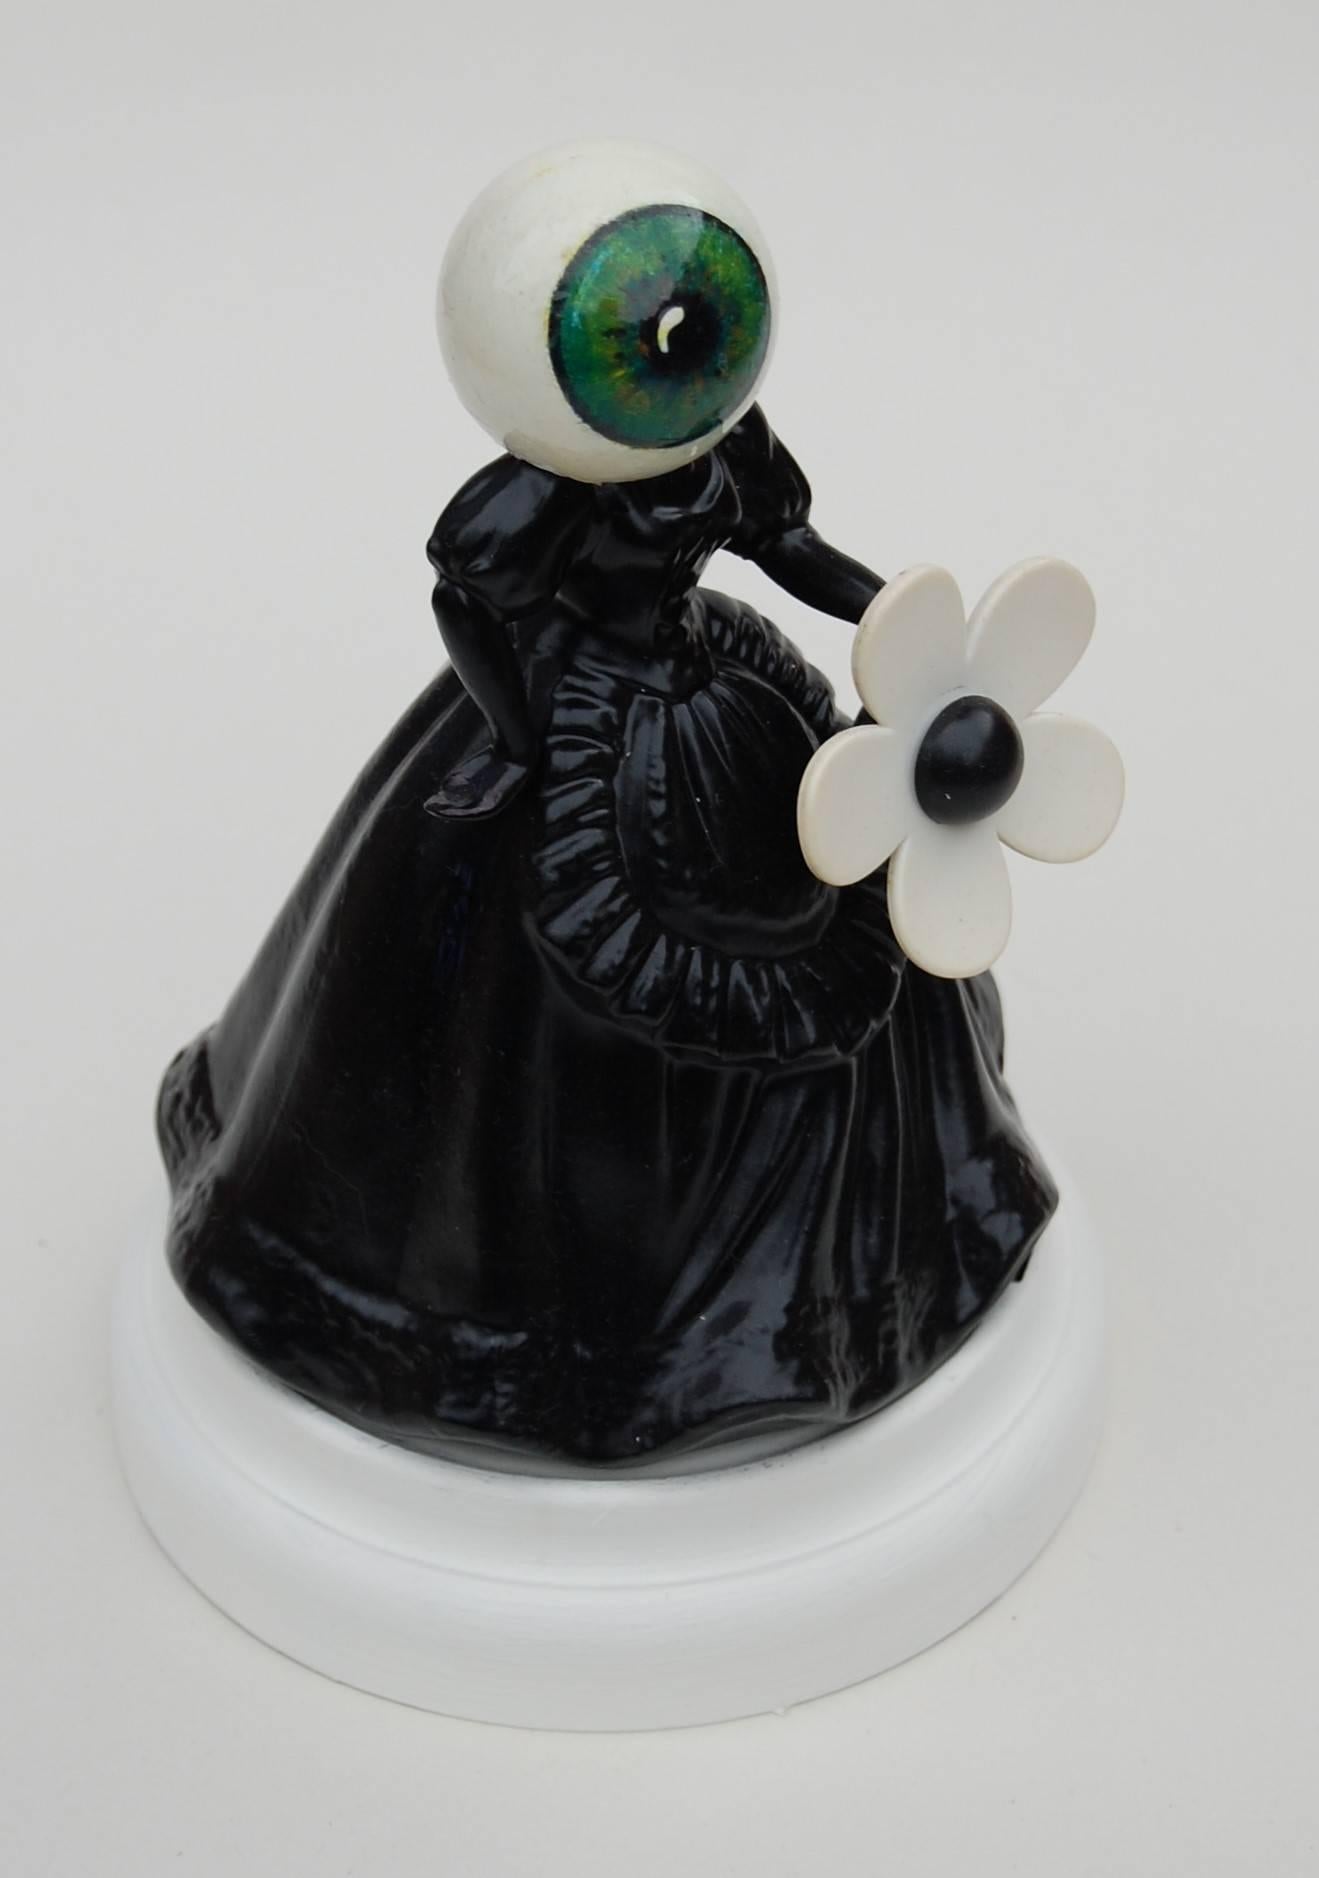 U Shall Go To The Eyeball, china figurine, painted eyeball, monochrome, original - Mixed Media Art by Matt Jordan